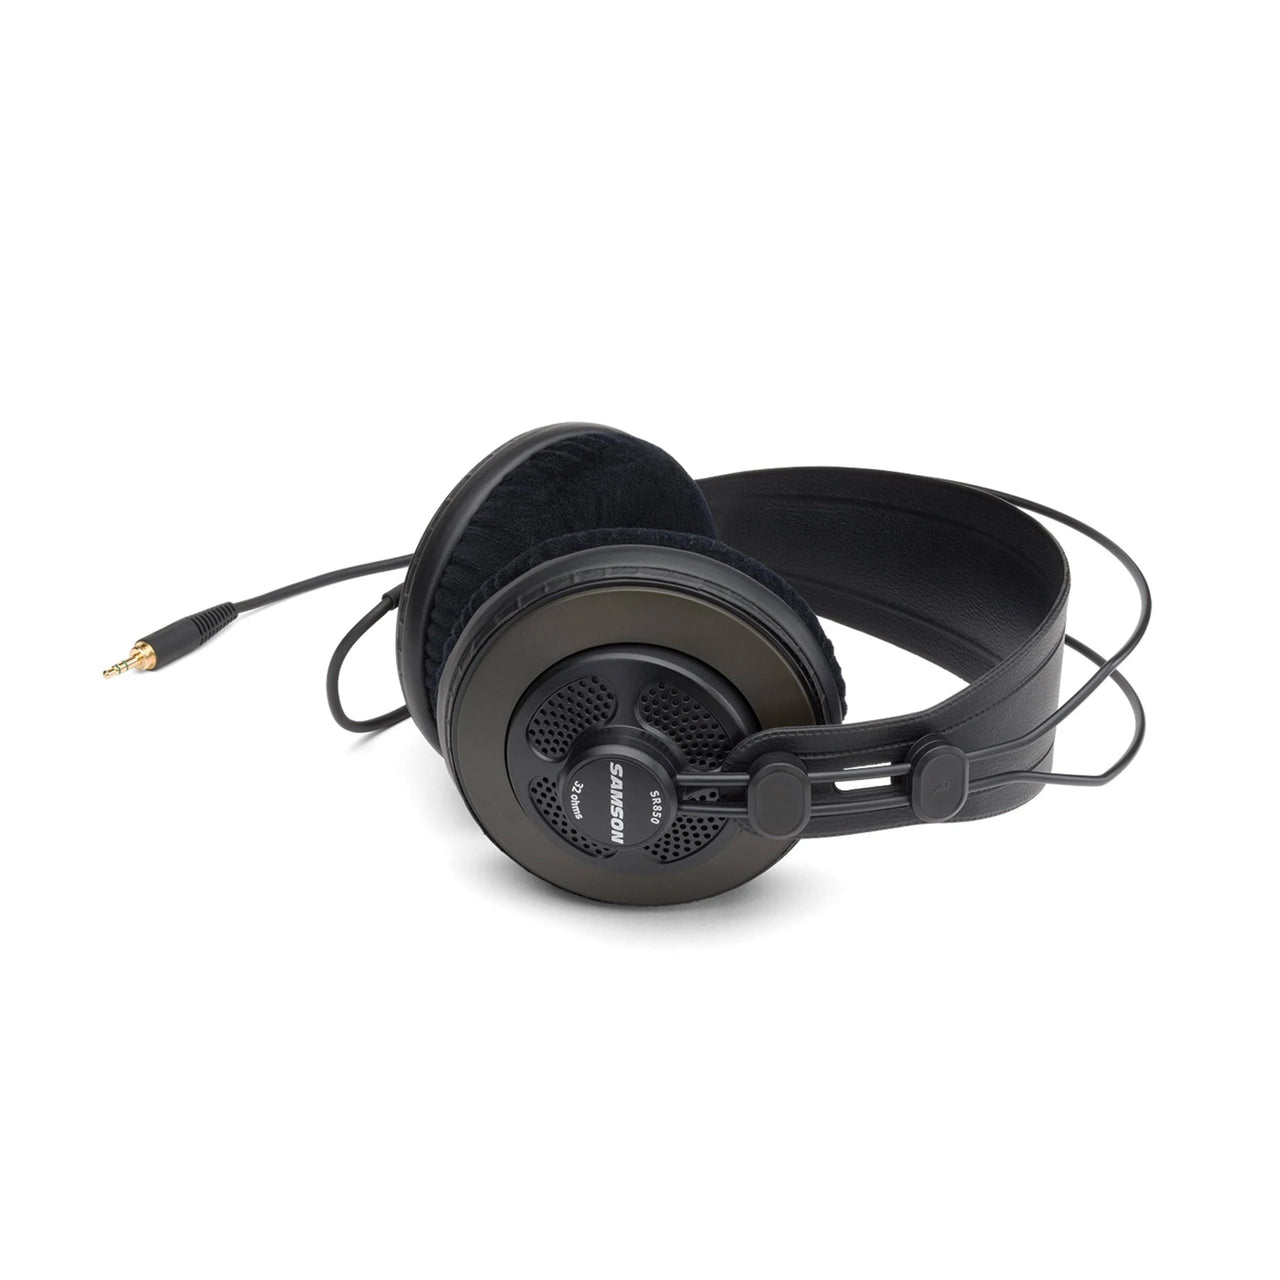 Samson SASR50C Professional Studio Reference Headphones